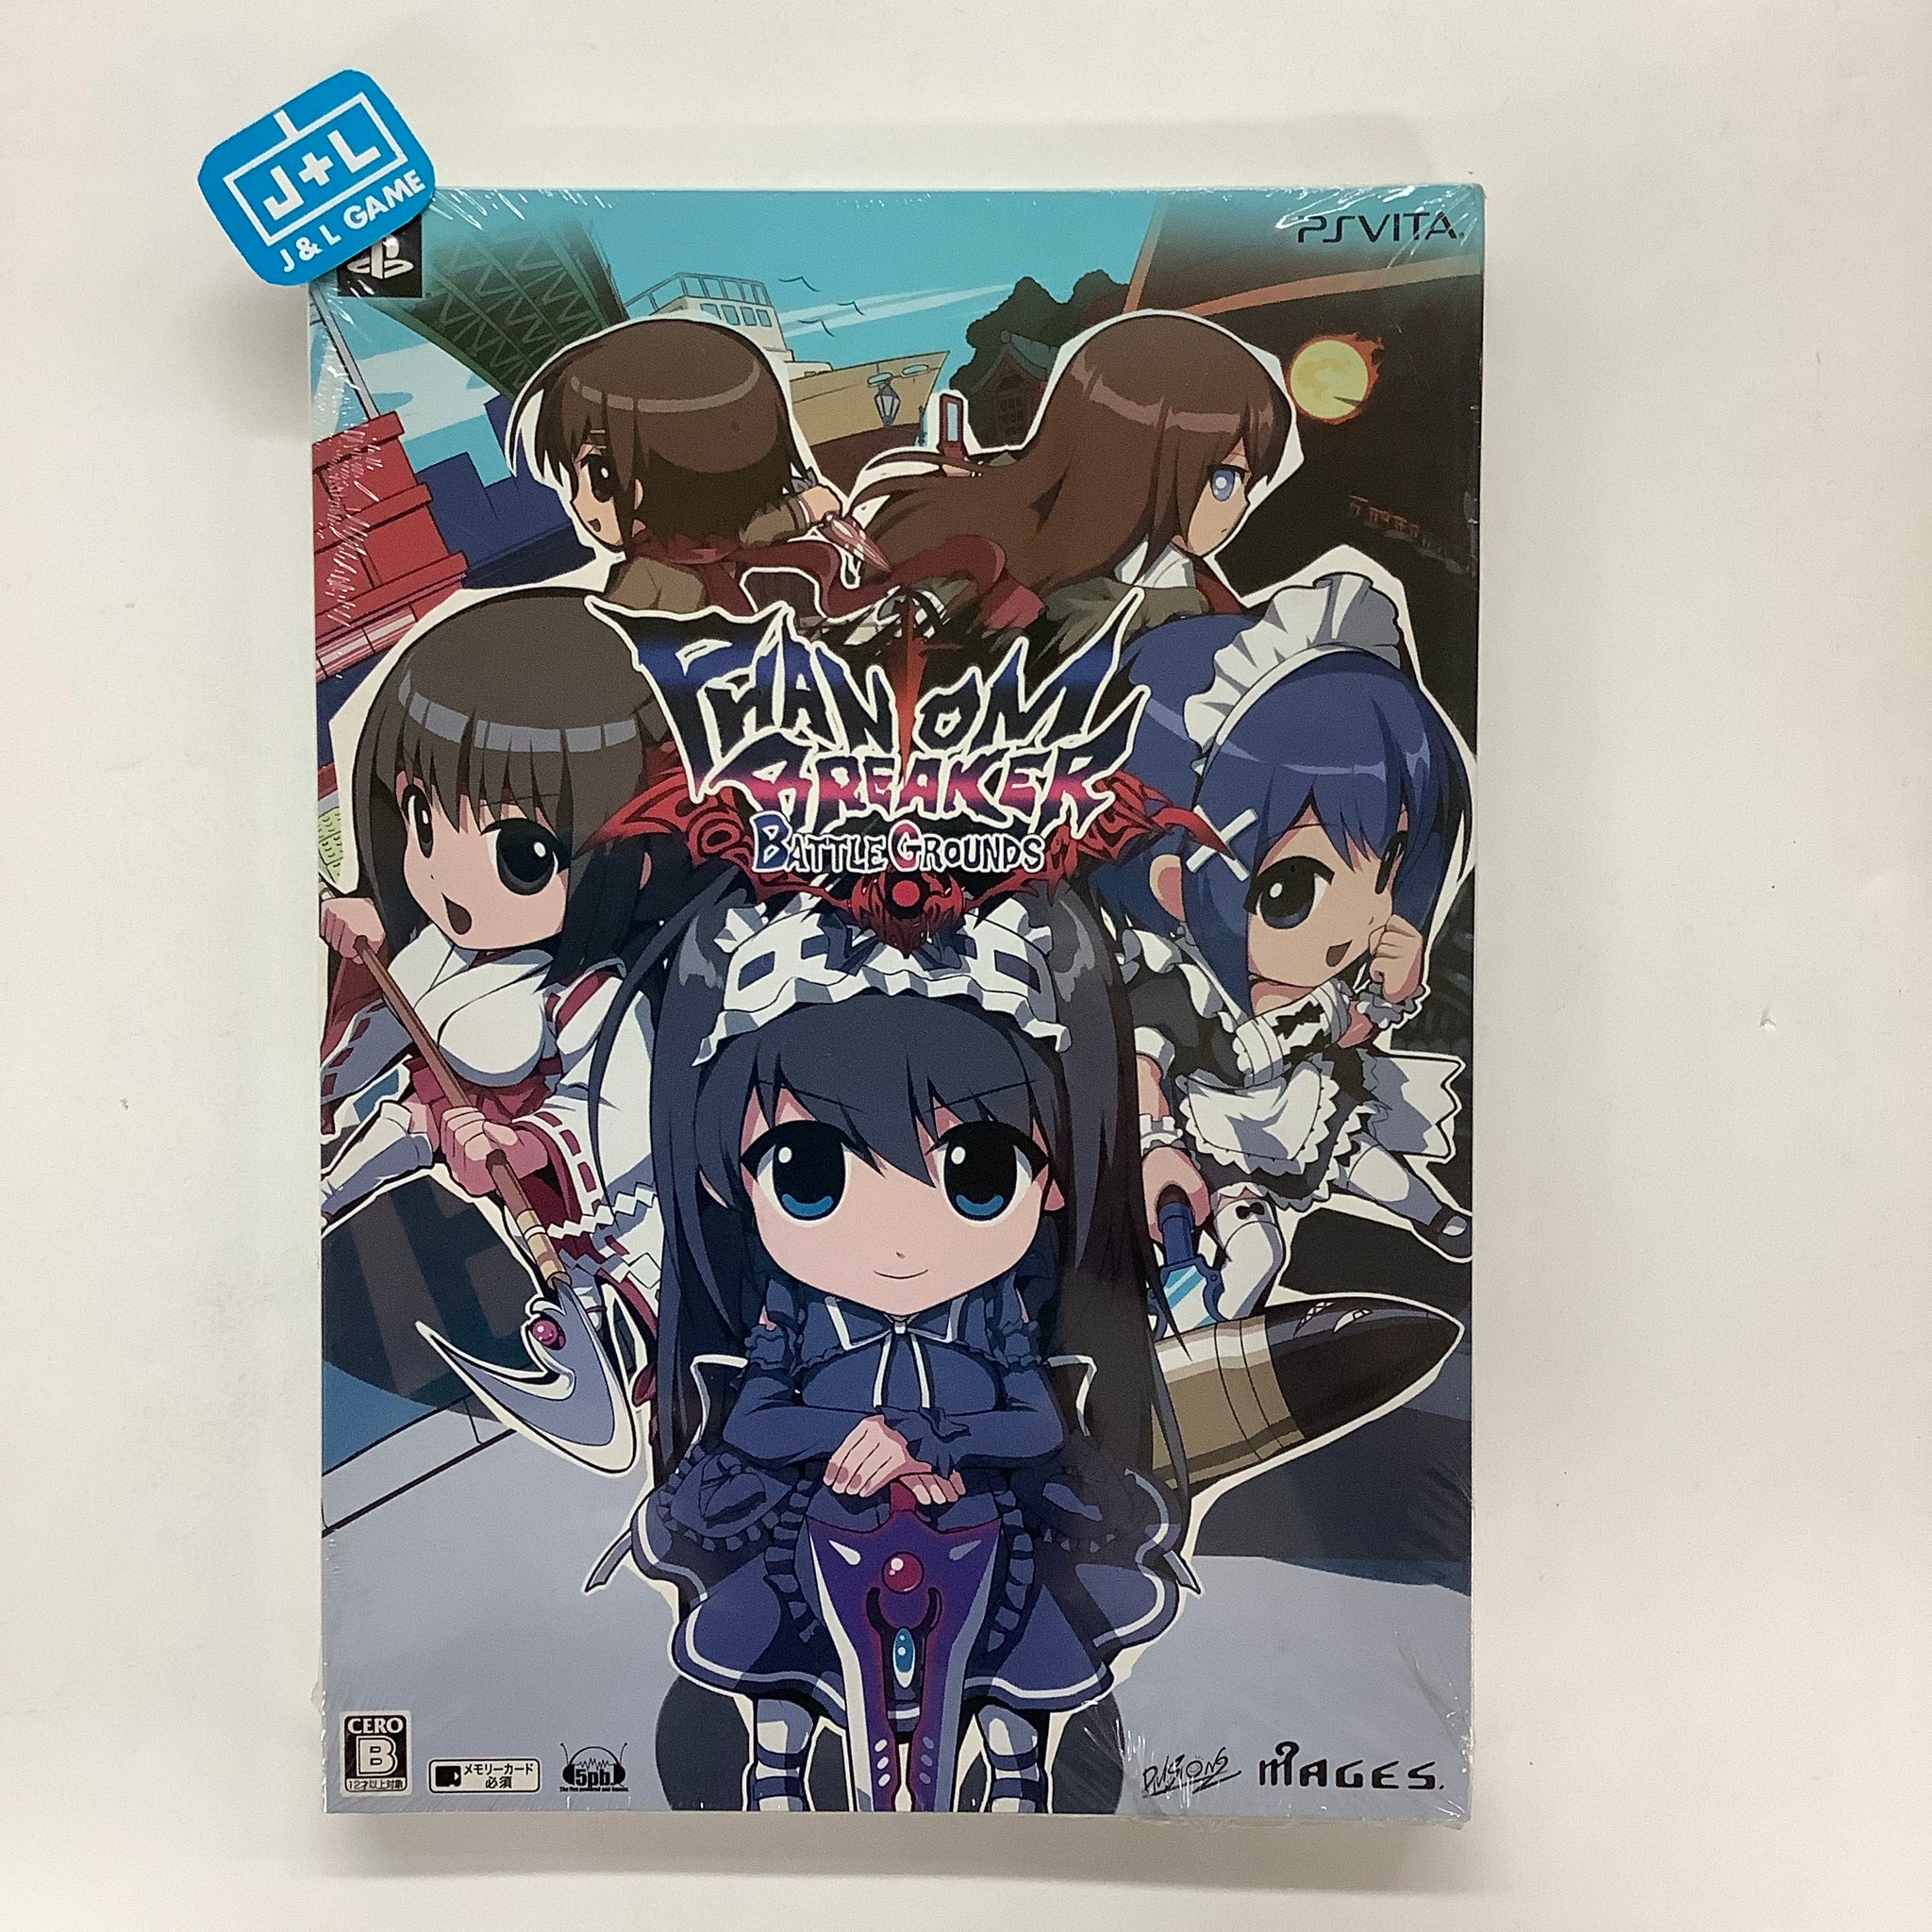 Phantom breaker: Battle Ground (Limited Edition) - (PSV) PlayStation Vita (Japanese Import) Video Games Sony   